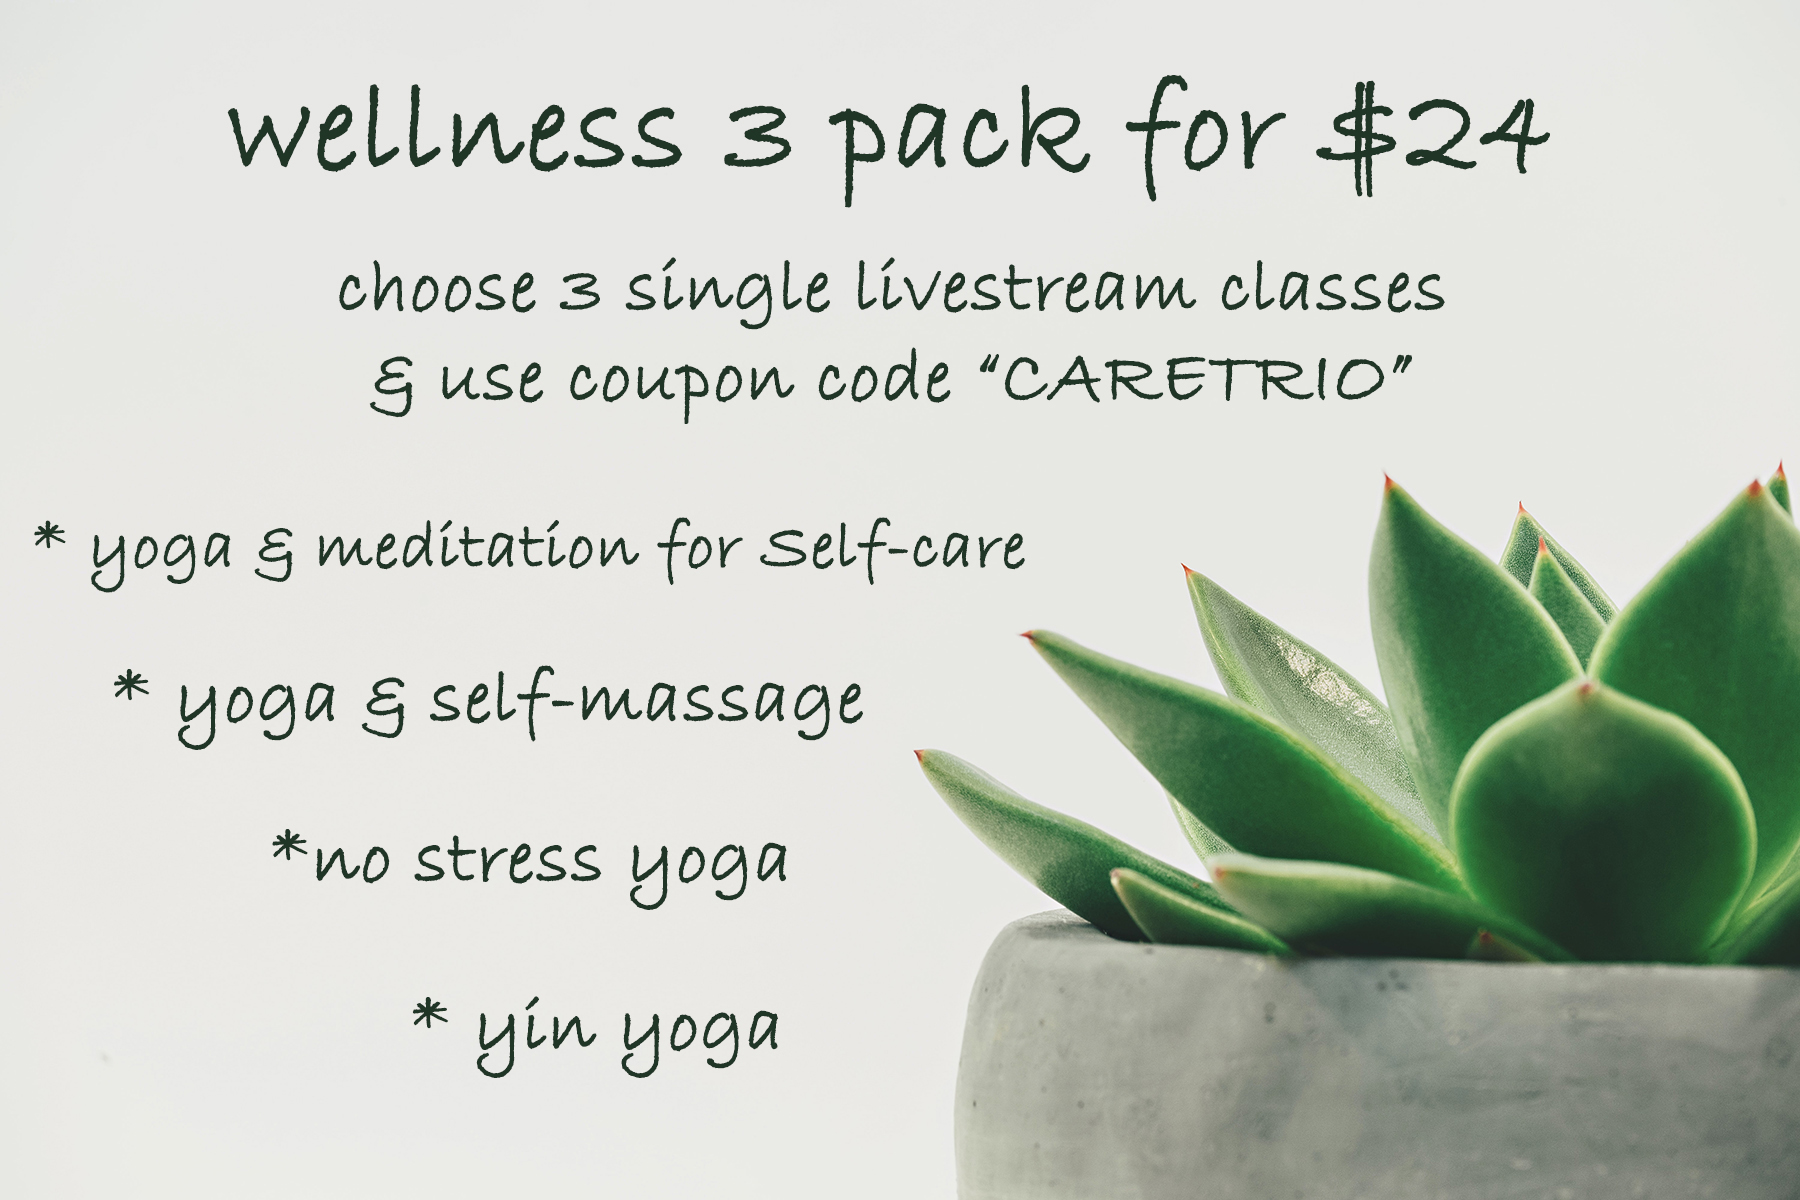 3 Wellness classes for $21